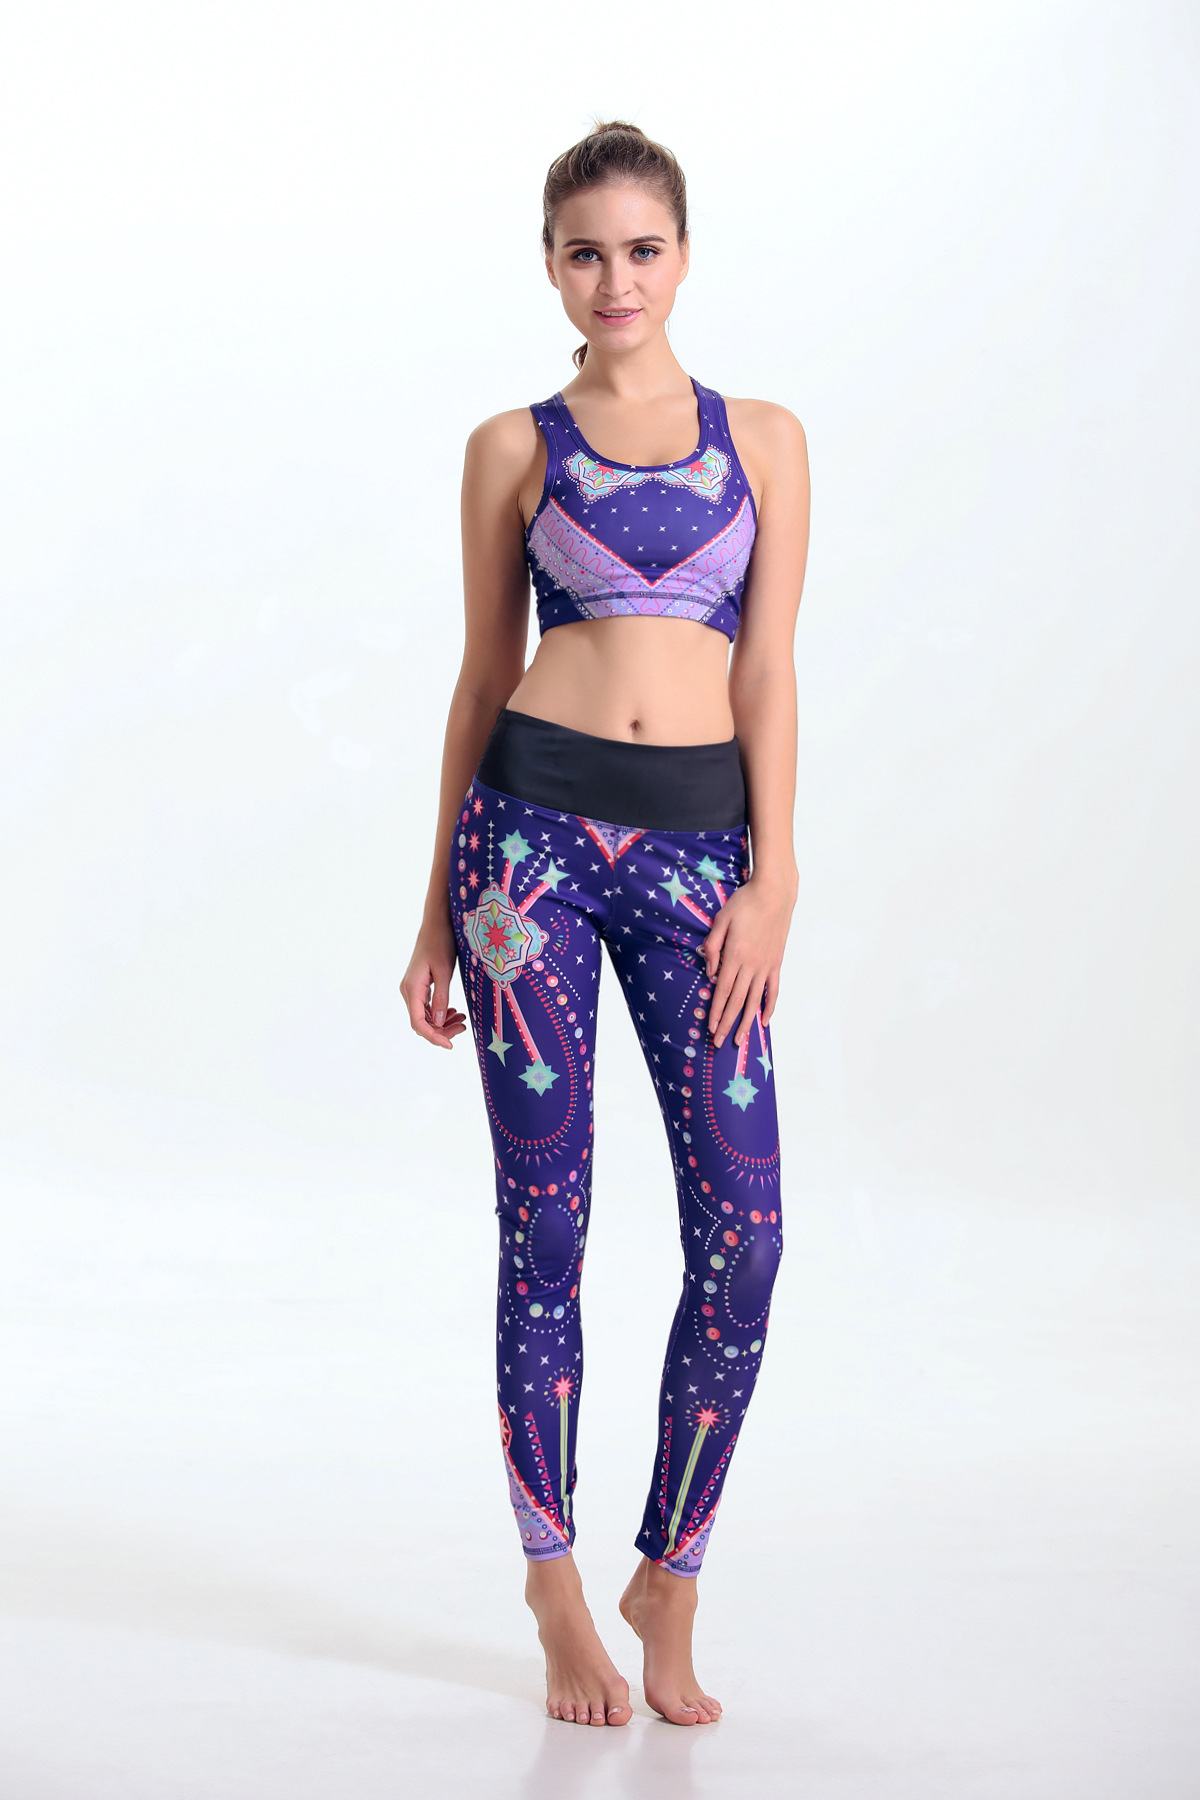 YG1103-1 Women s Yoga Gym Outfits 2pcs Digital Printed Bra Top and Leggings